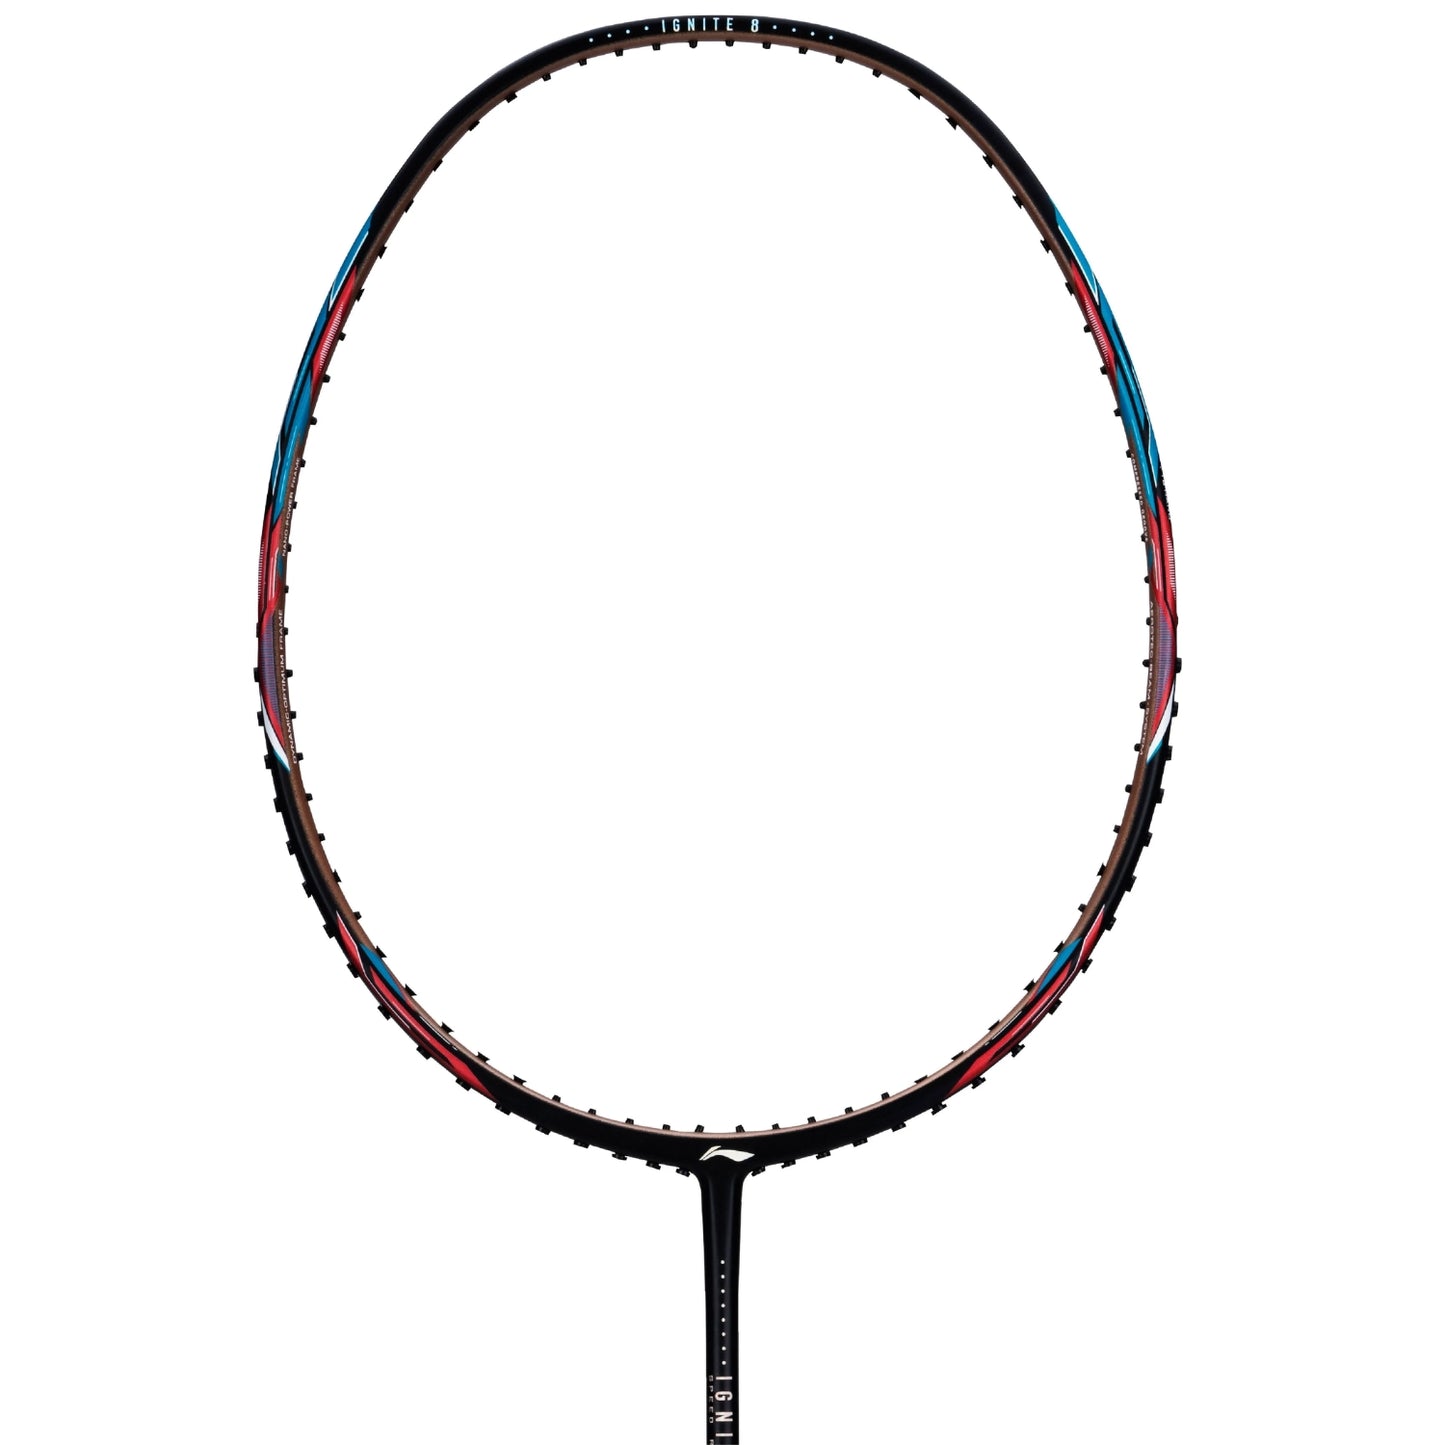 Li-Ning Ignite 8 Badminton Racquet - Best Price online Prokicksports.com